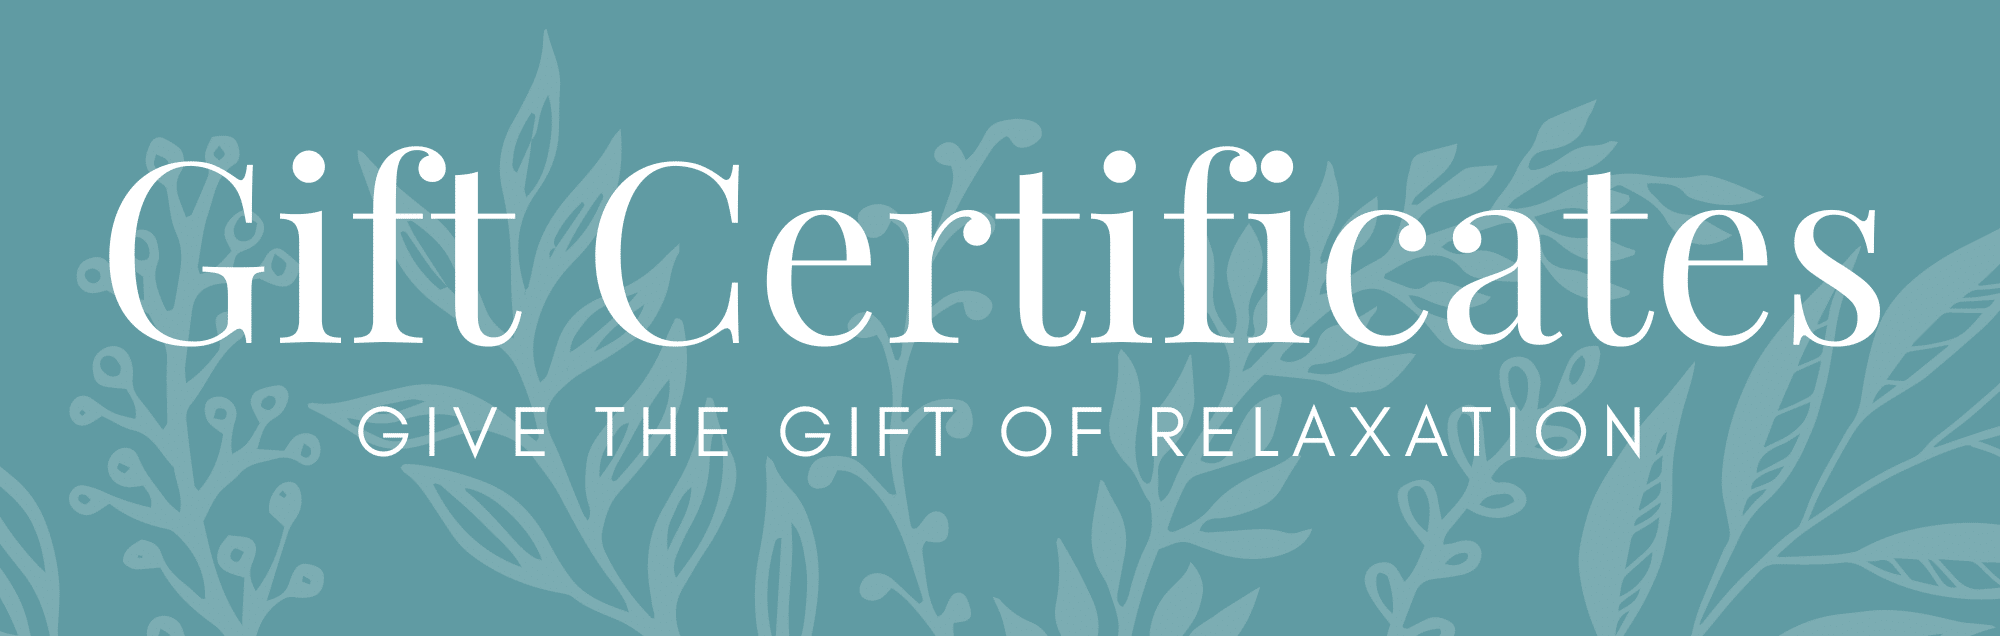 gift-certificate-website-banner